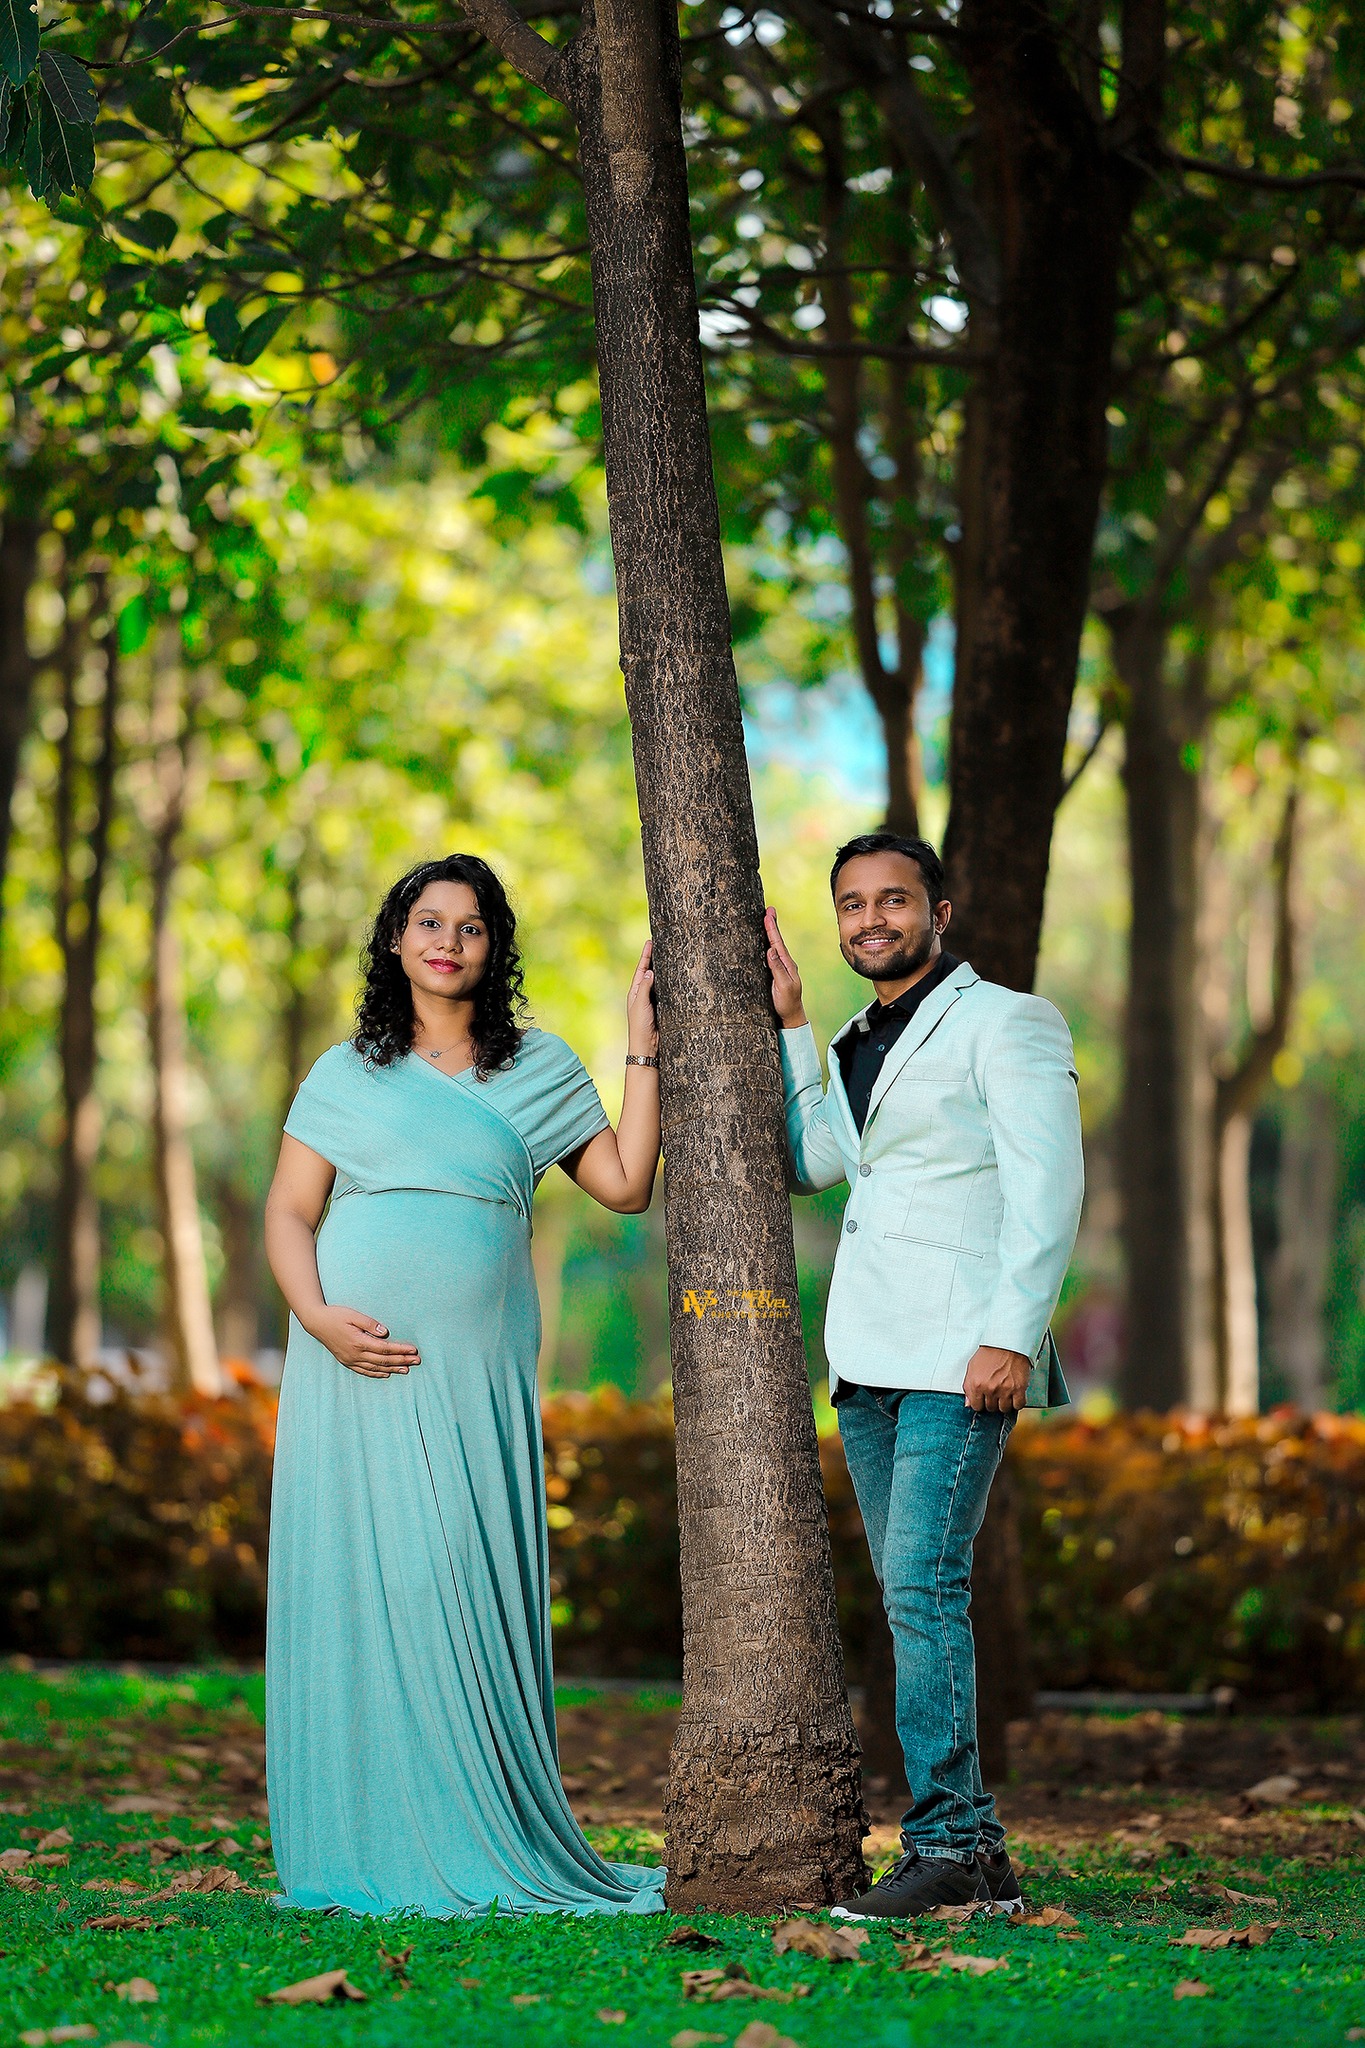 Indian Maternity Pregnancy Photoshoot Stunningly Beautiful - LJO Photography